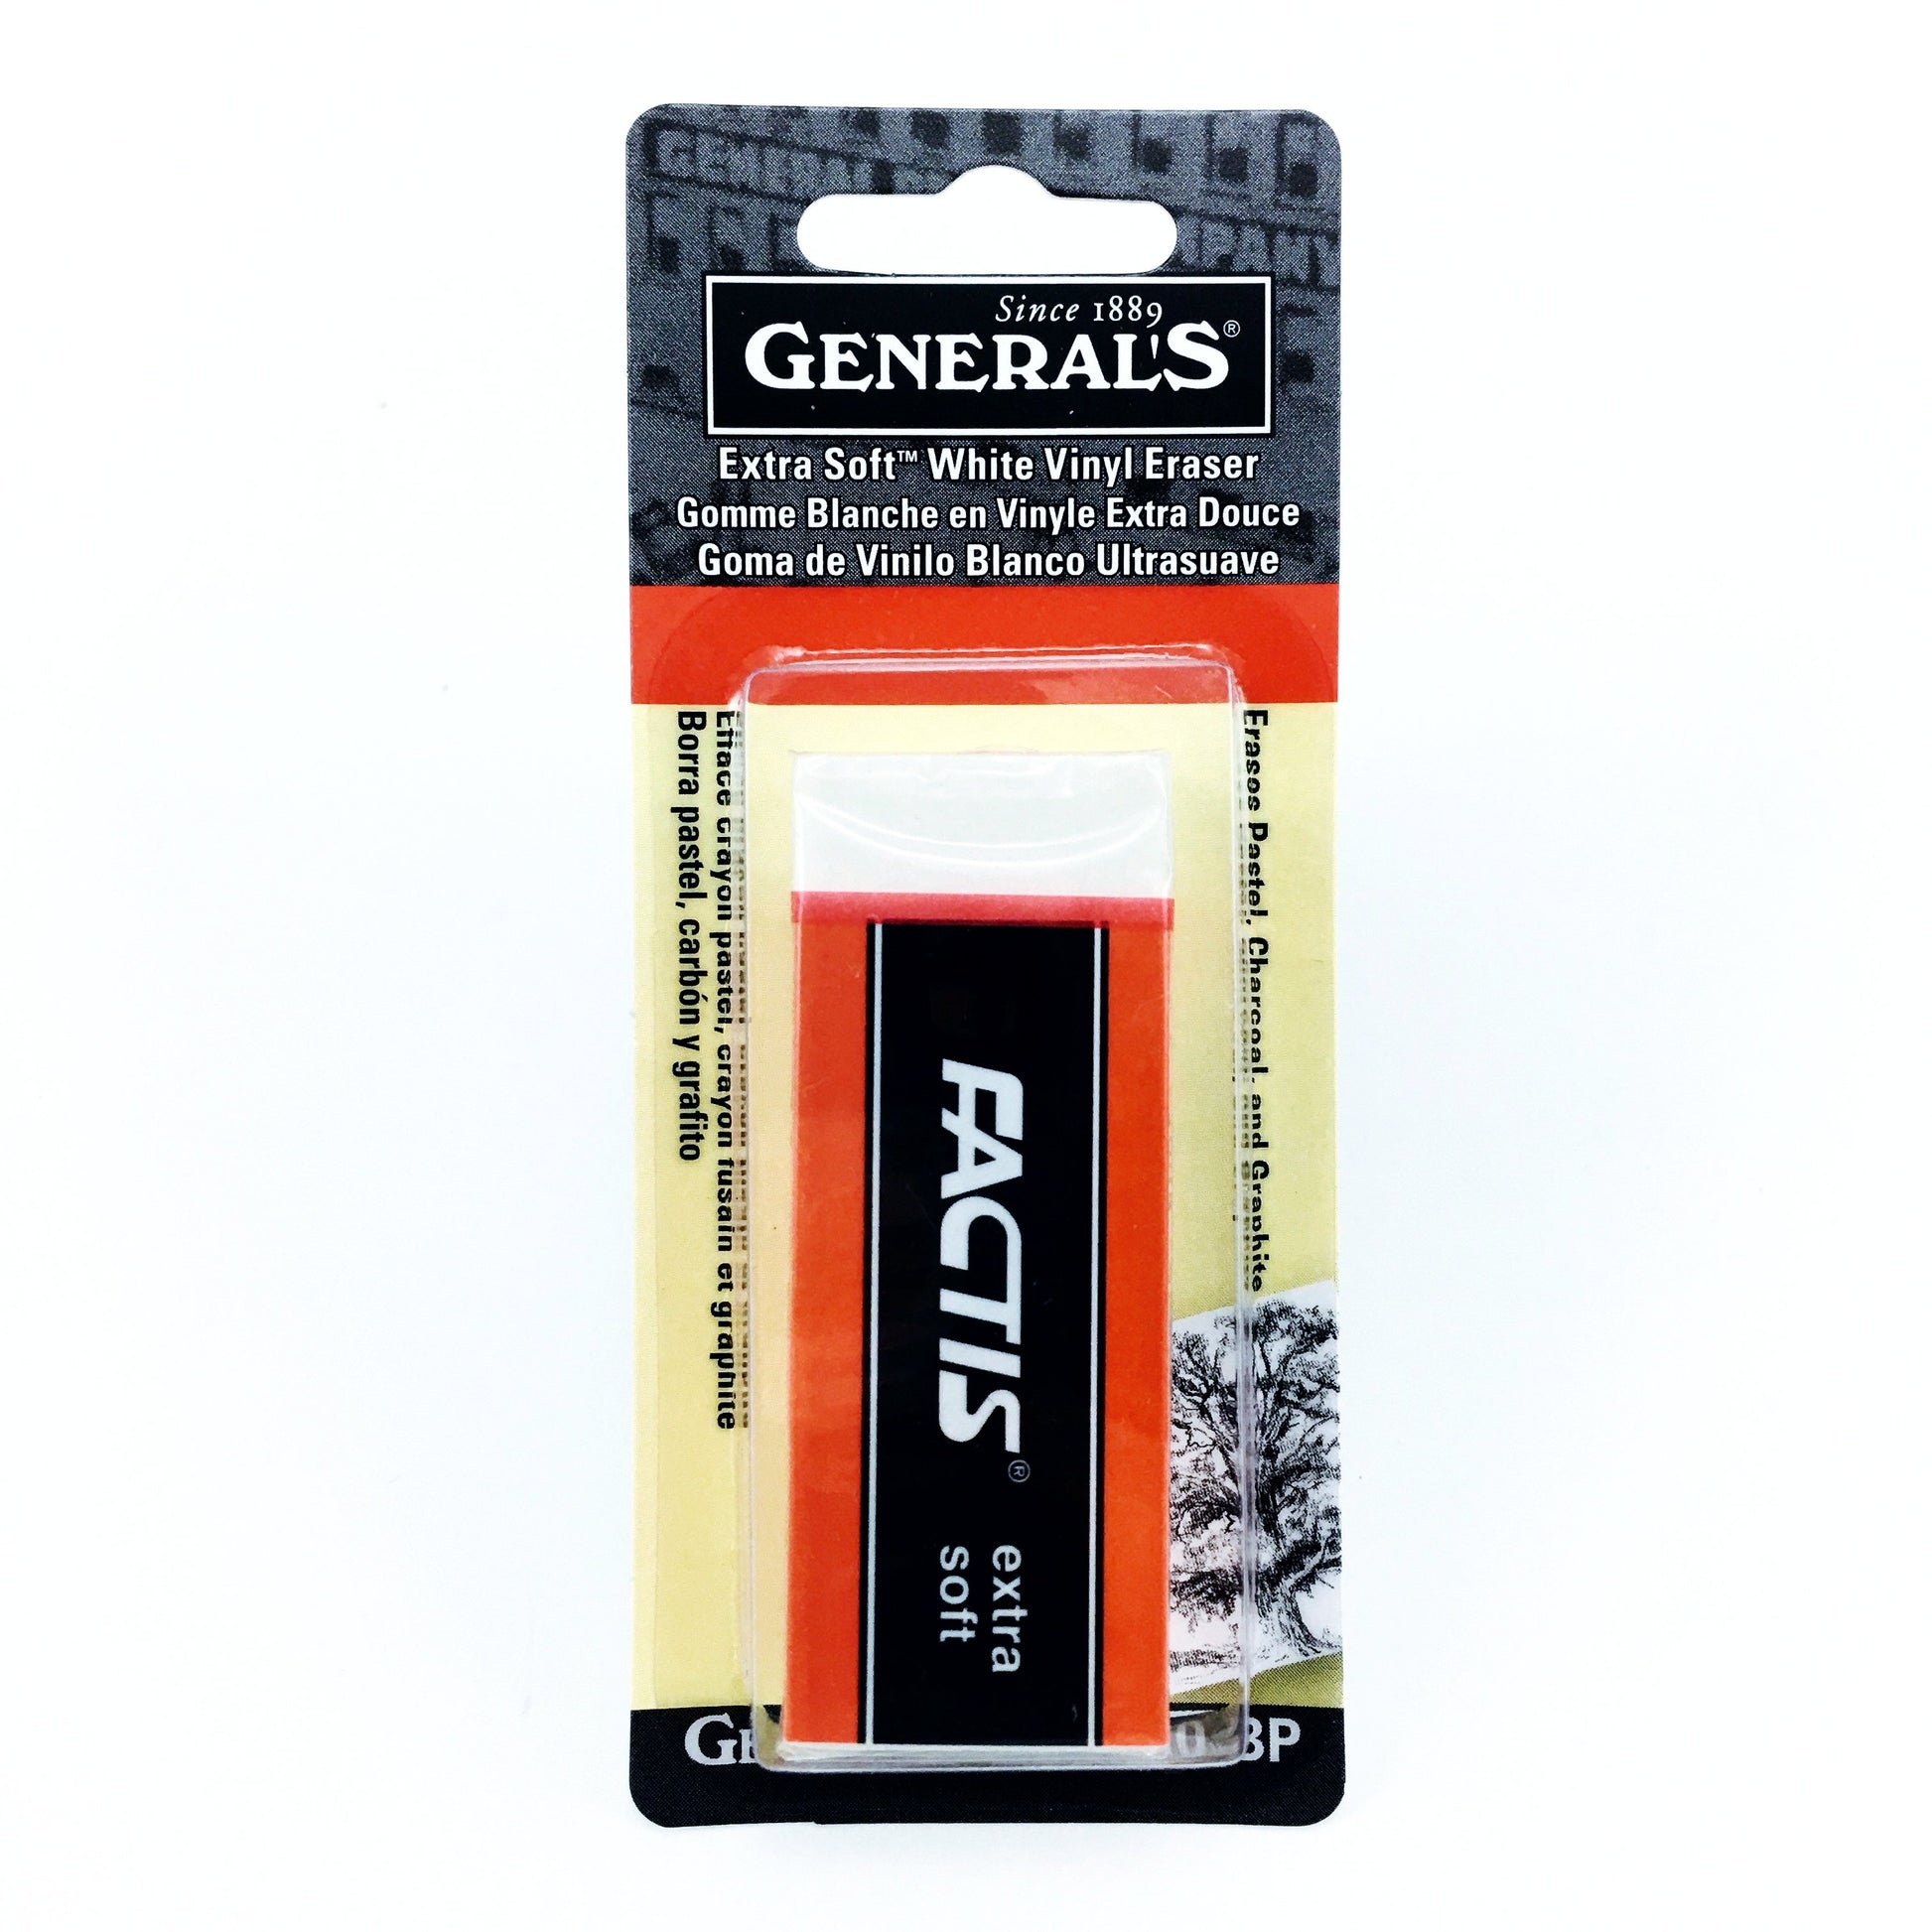 General's Factis Extra Soft White Vinyl Eraser - by General's - K. A. Artist Shop